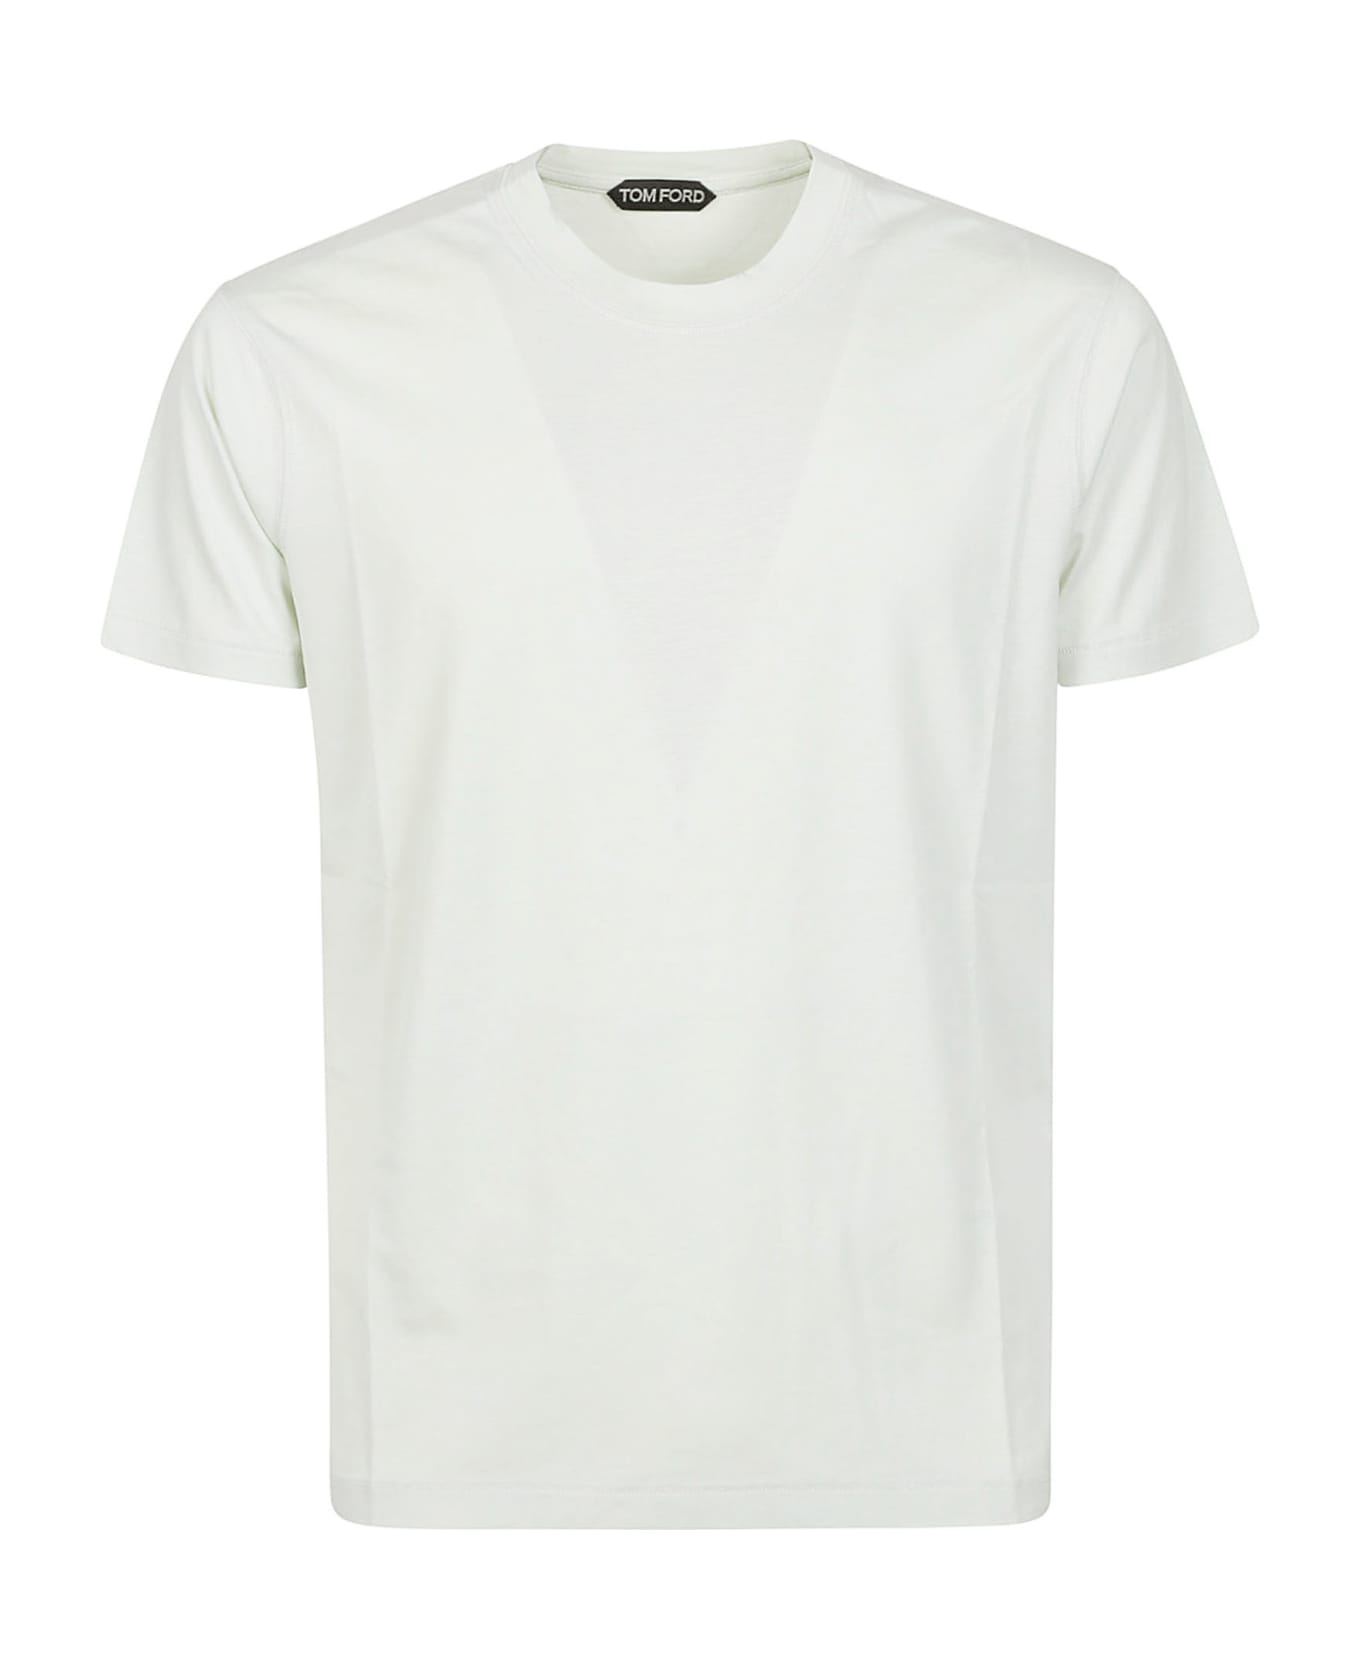 Tom Ford T-shirt - Pale Mint